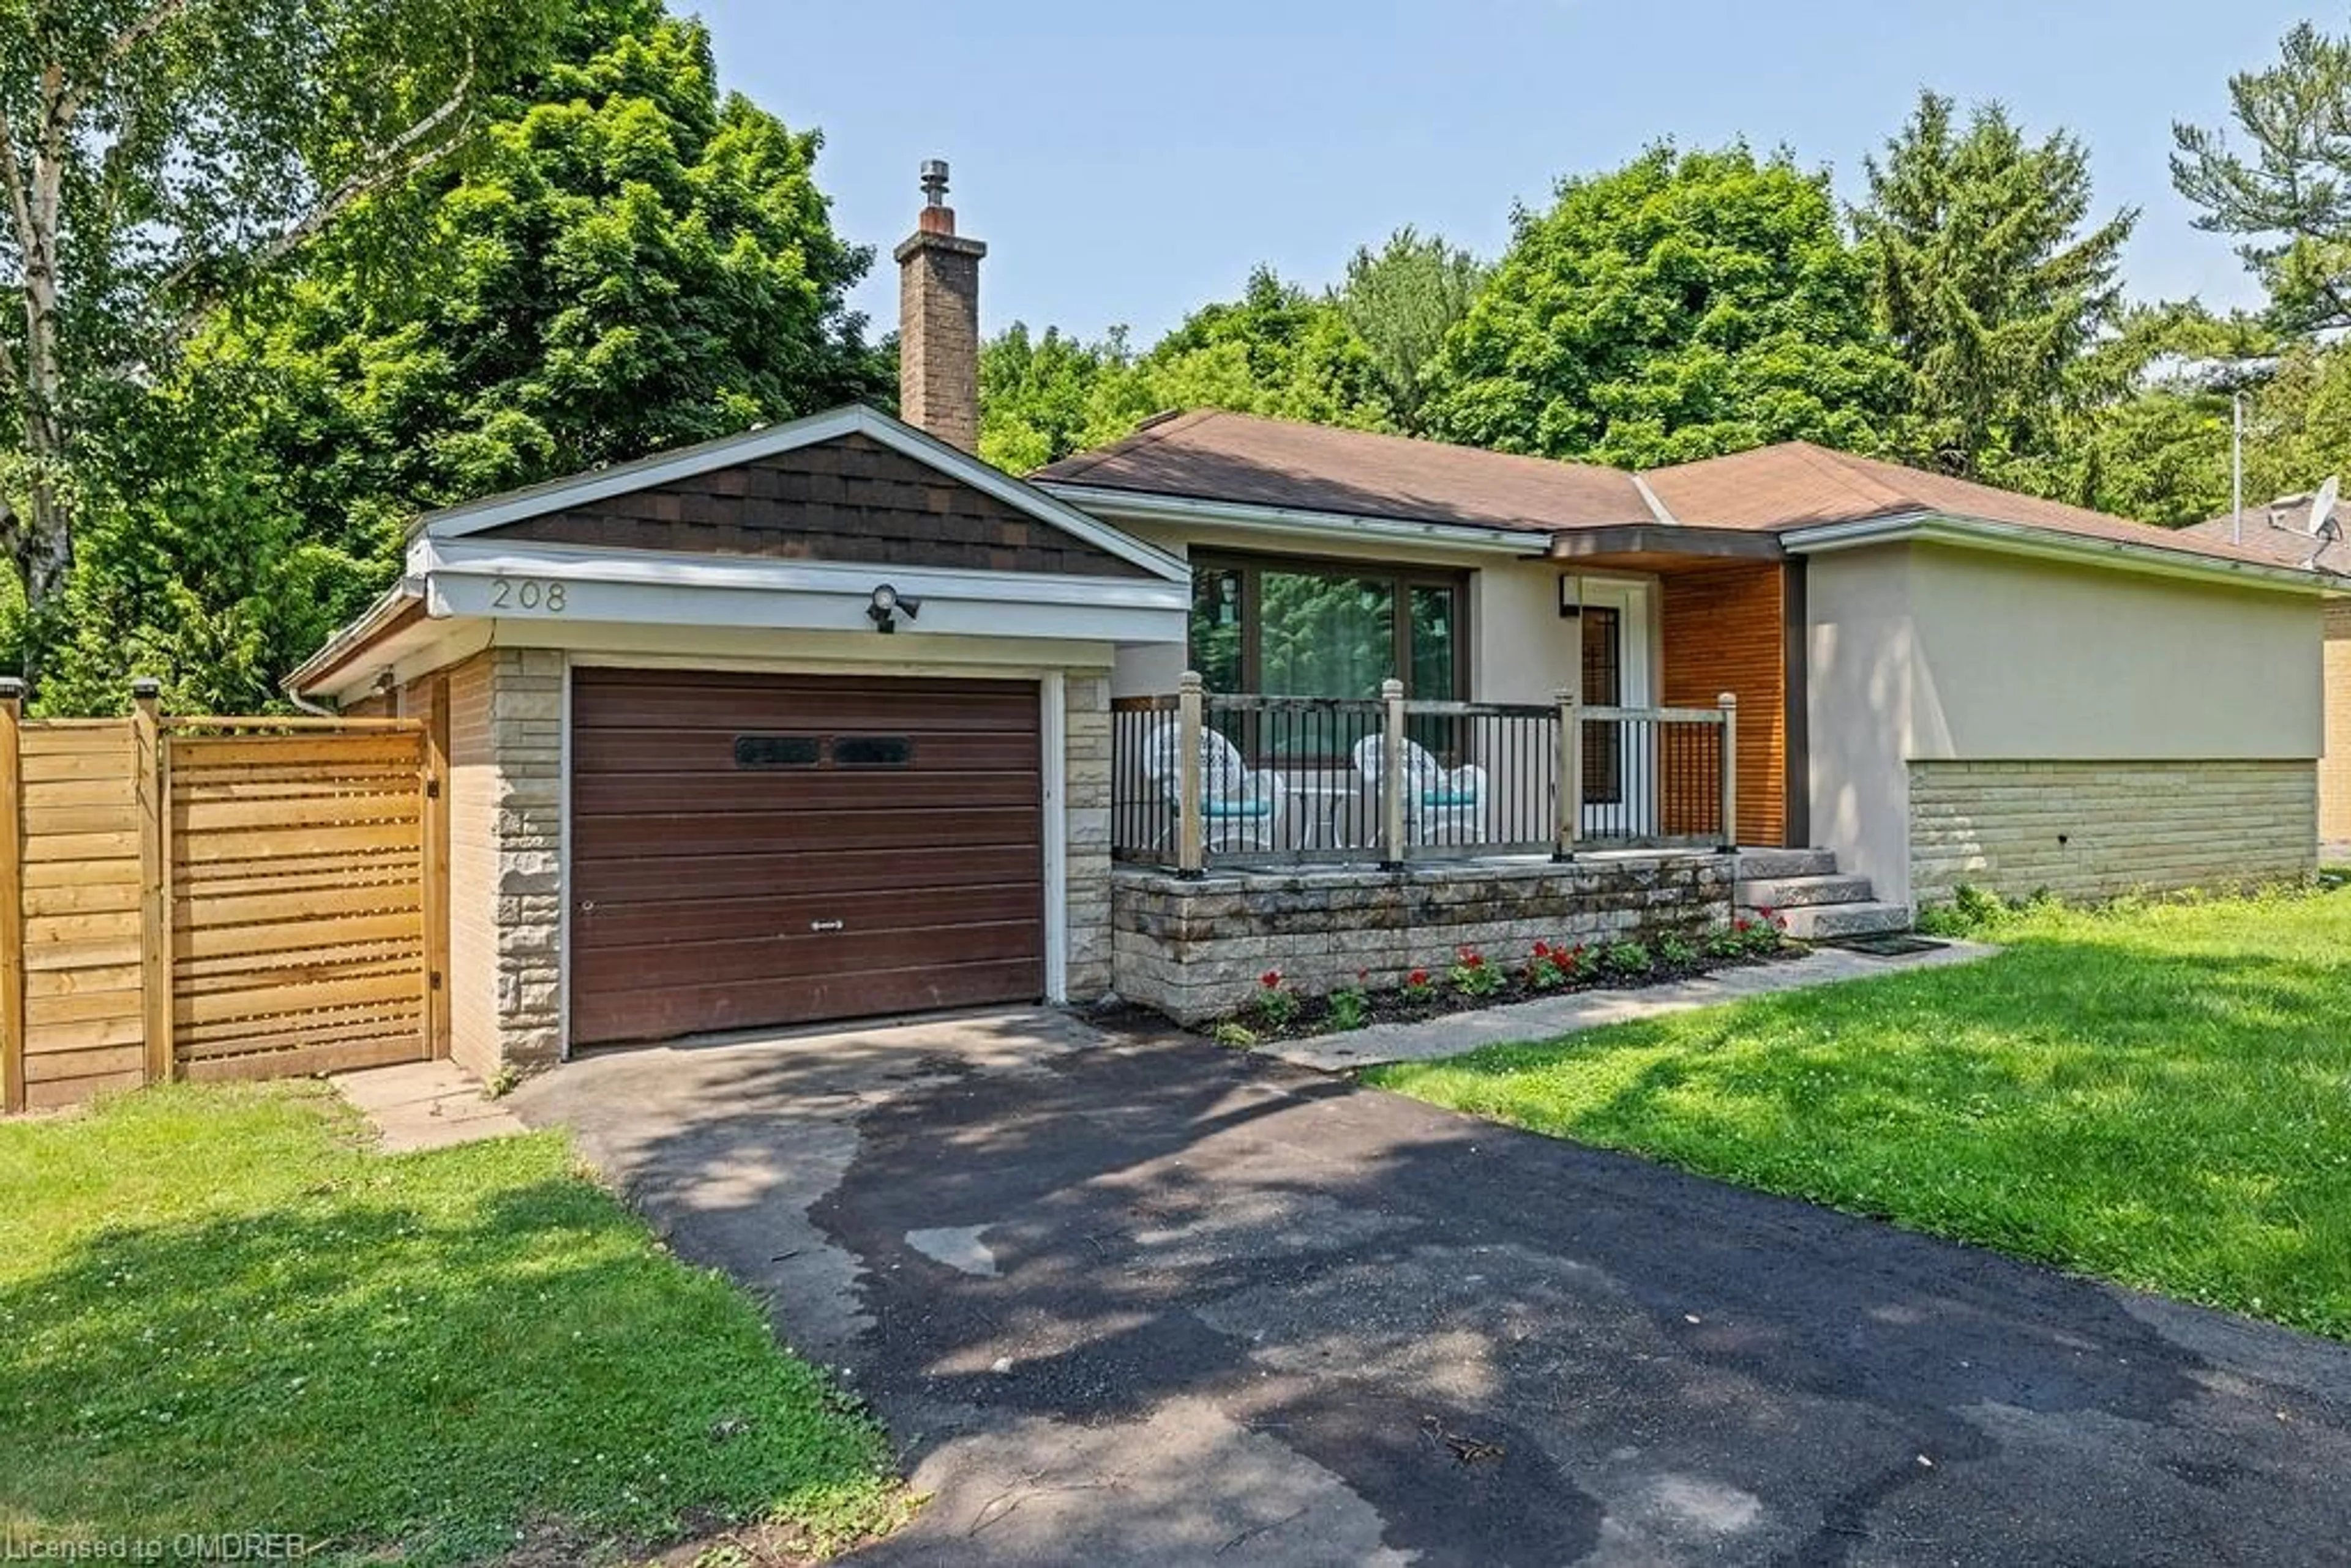 Home with brick exterior material for 208 Glen Oak Dr, Oakville Ontario L6K 2J2